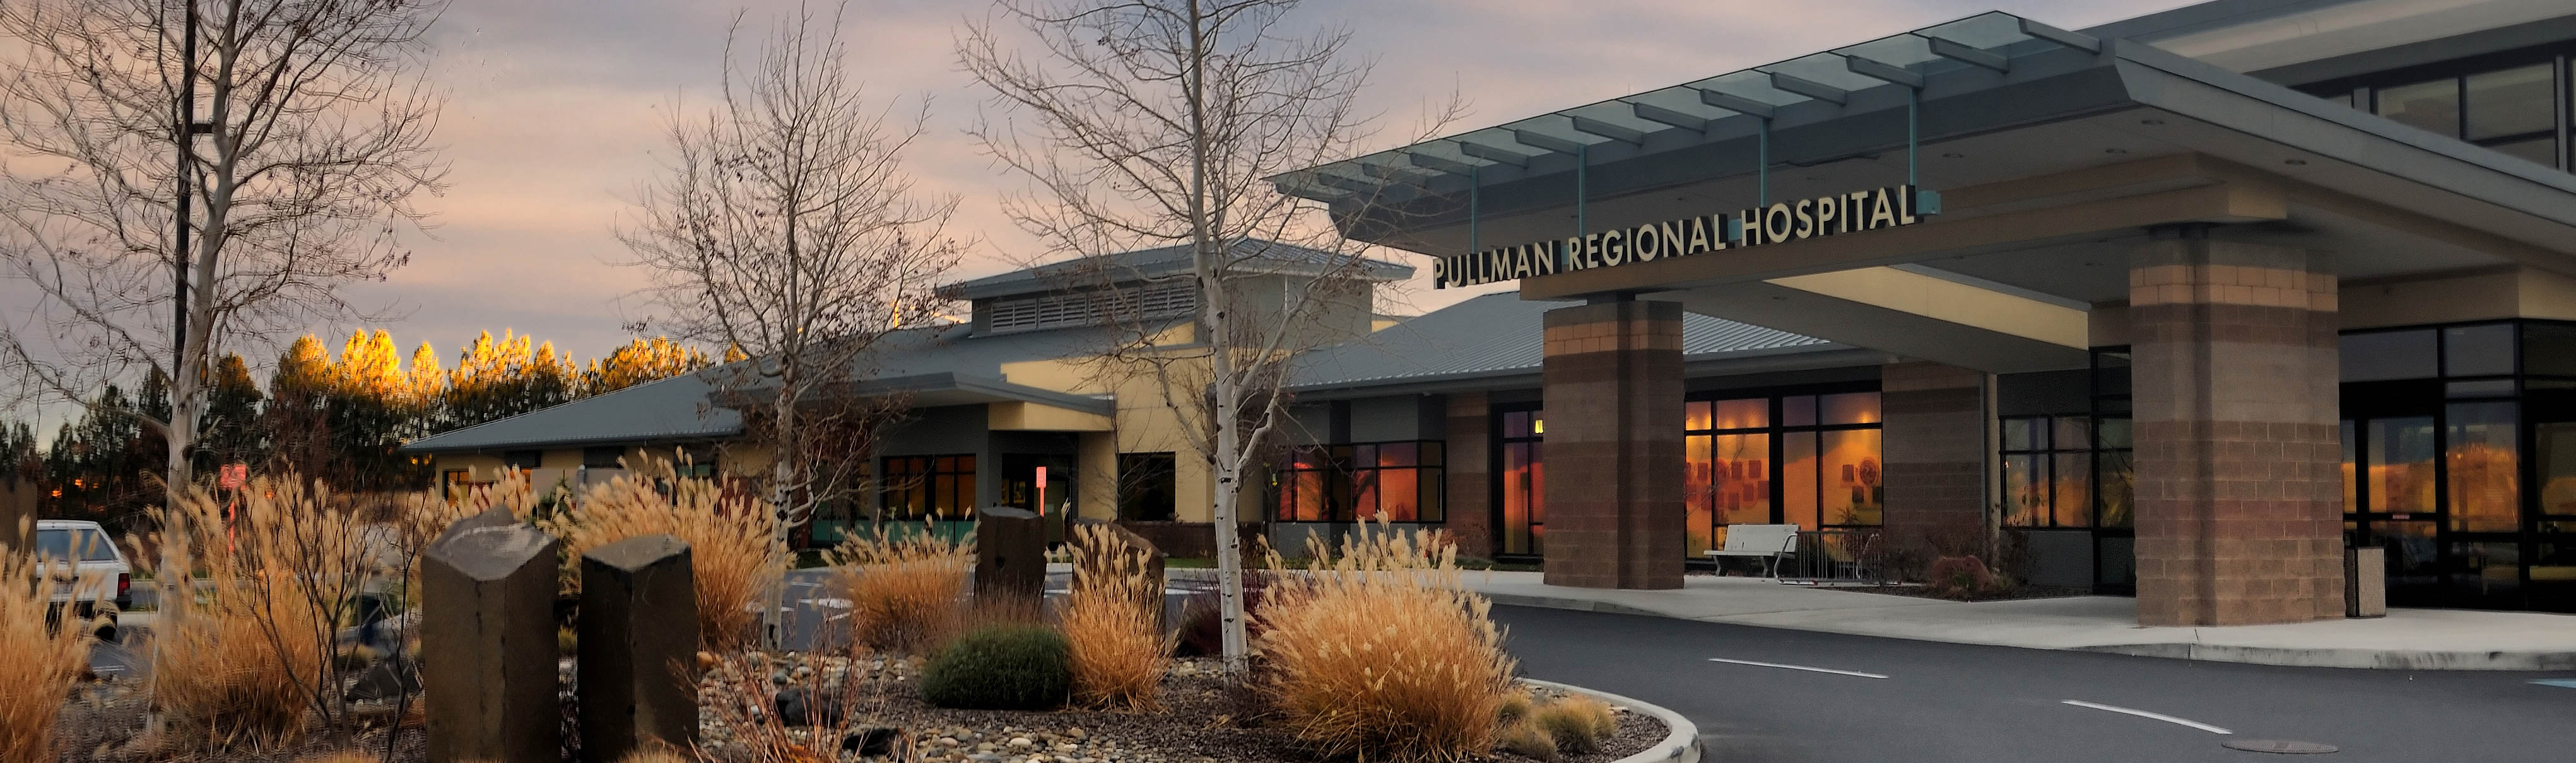 Pullman Regional Hospital - high-res-Entrance cropped